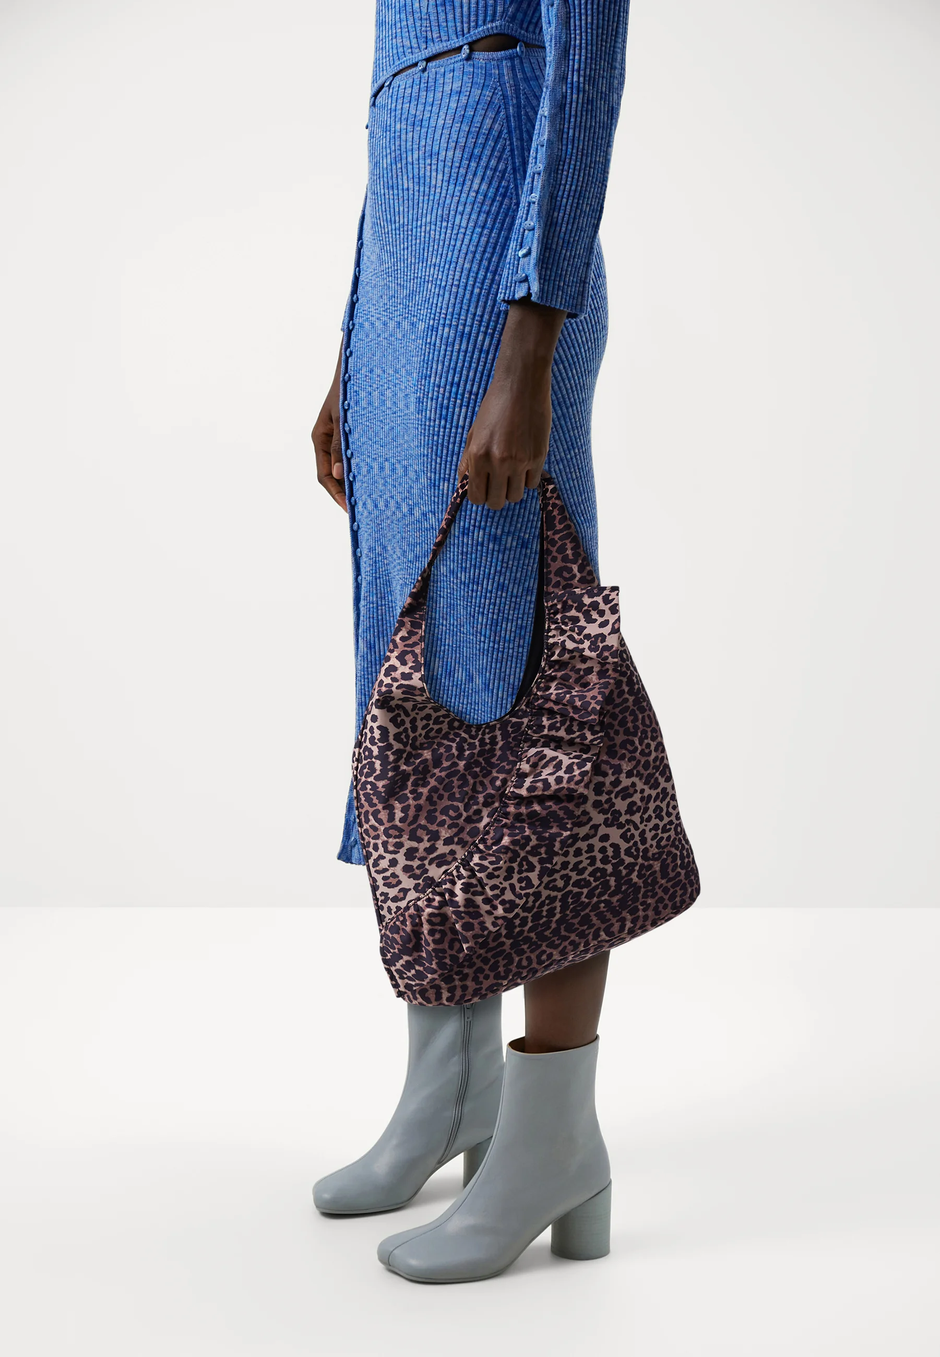 torba s leopard printom | Autor: Zalando